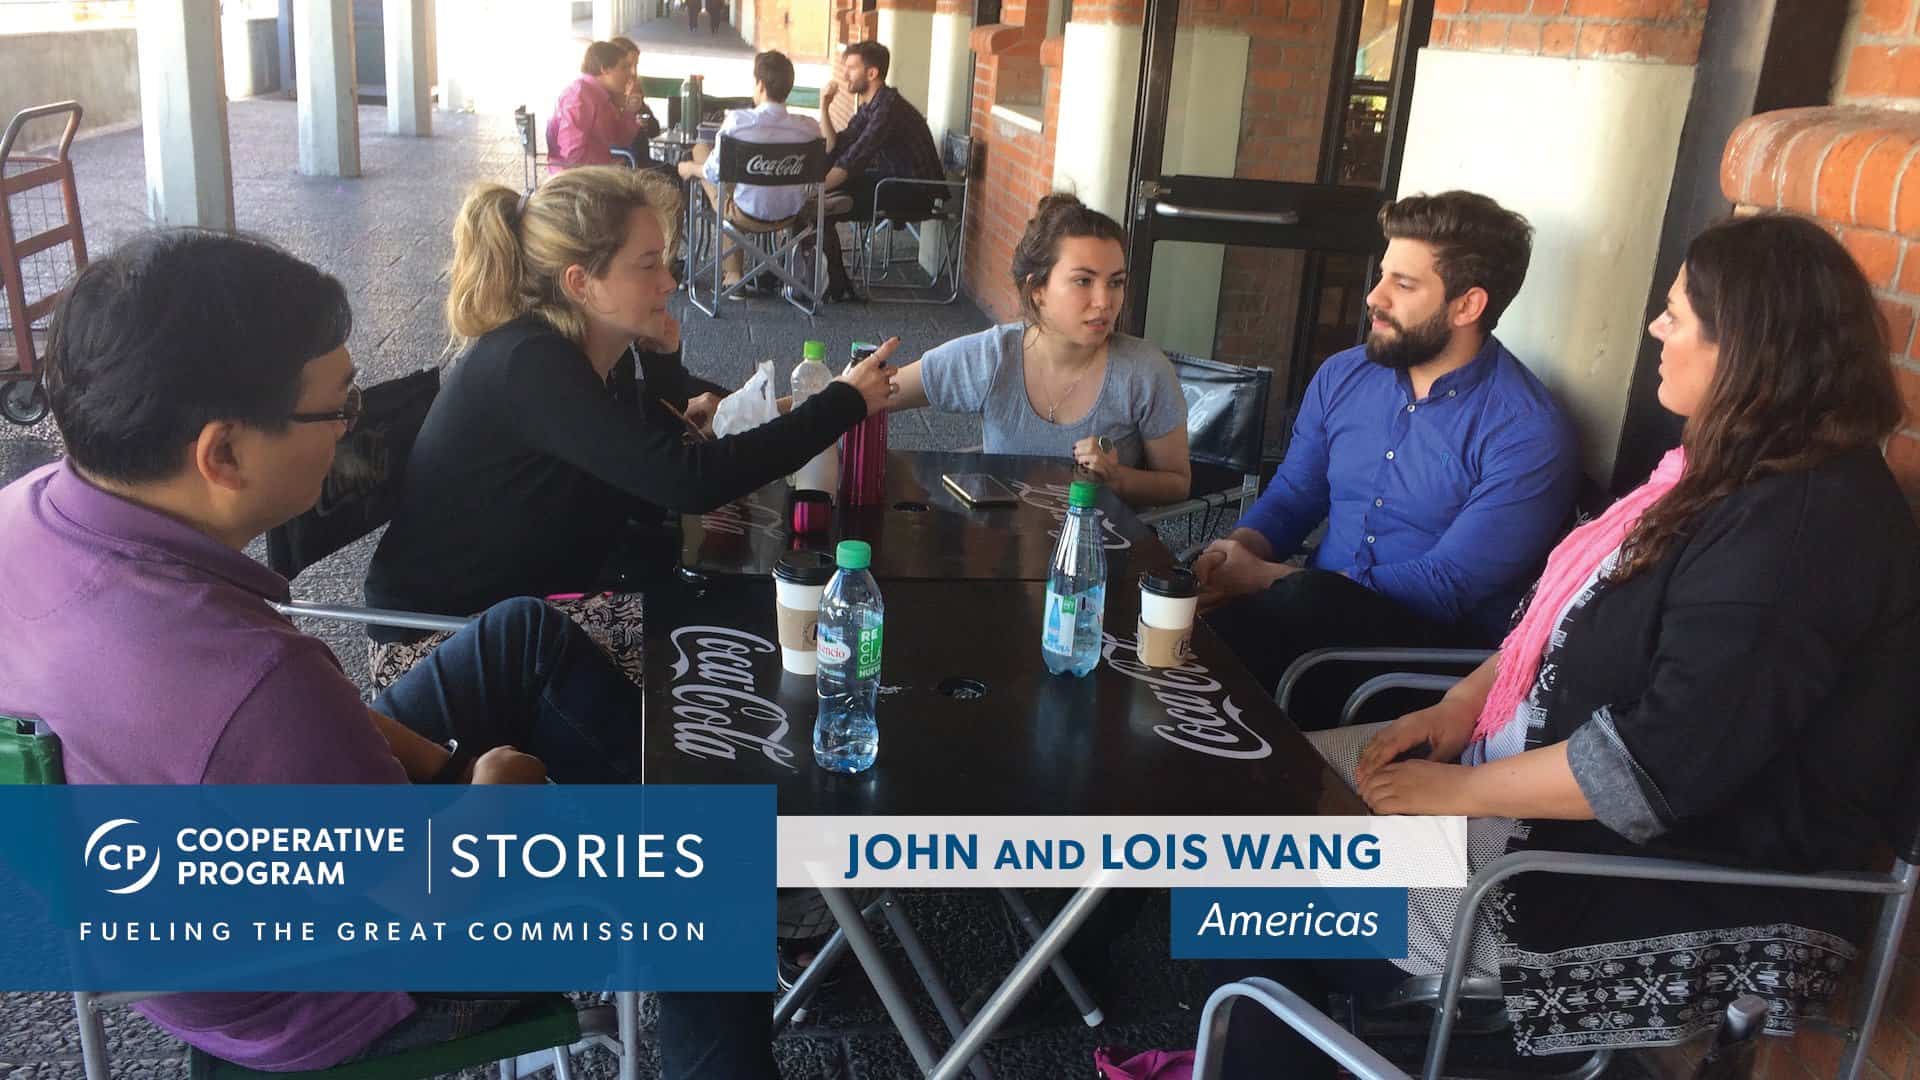 John and Lois Wang and friends